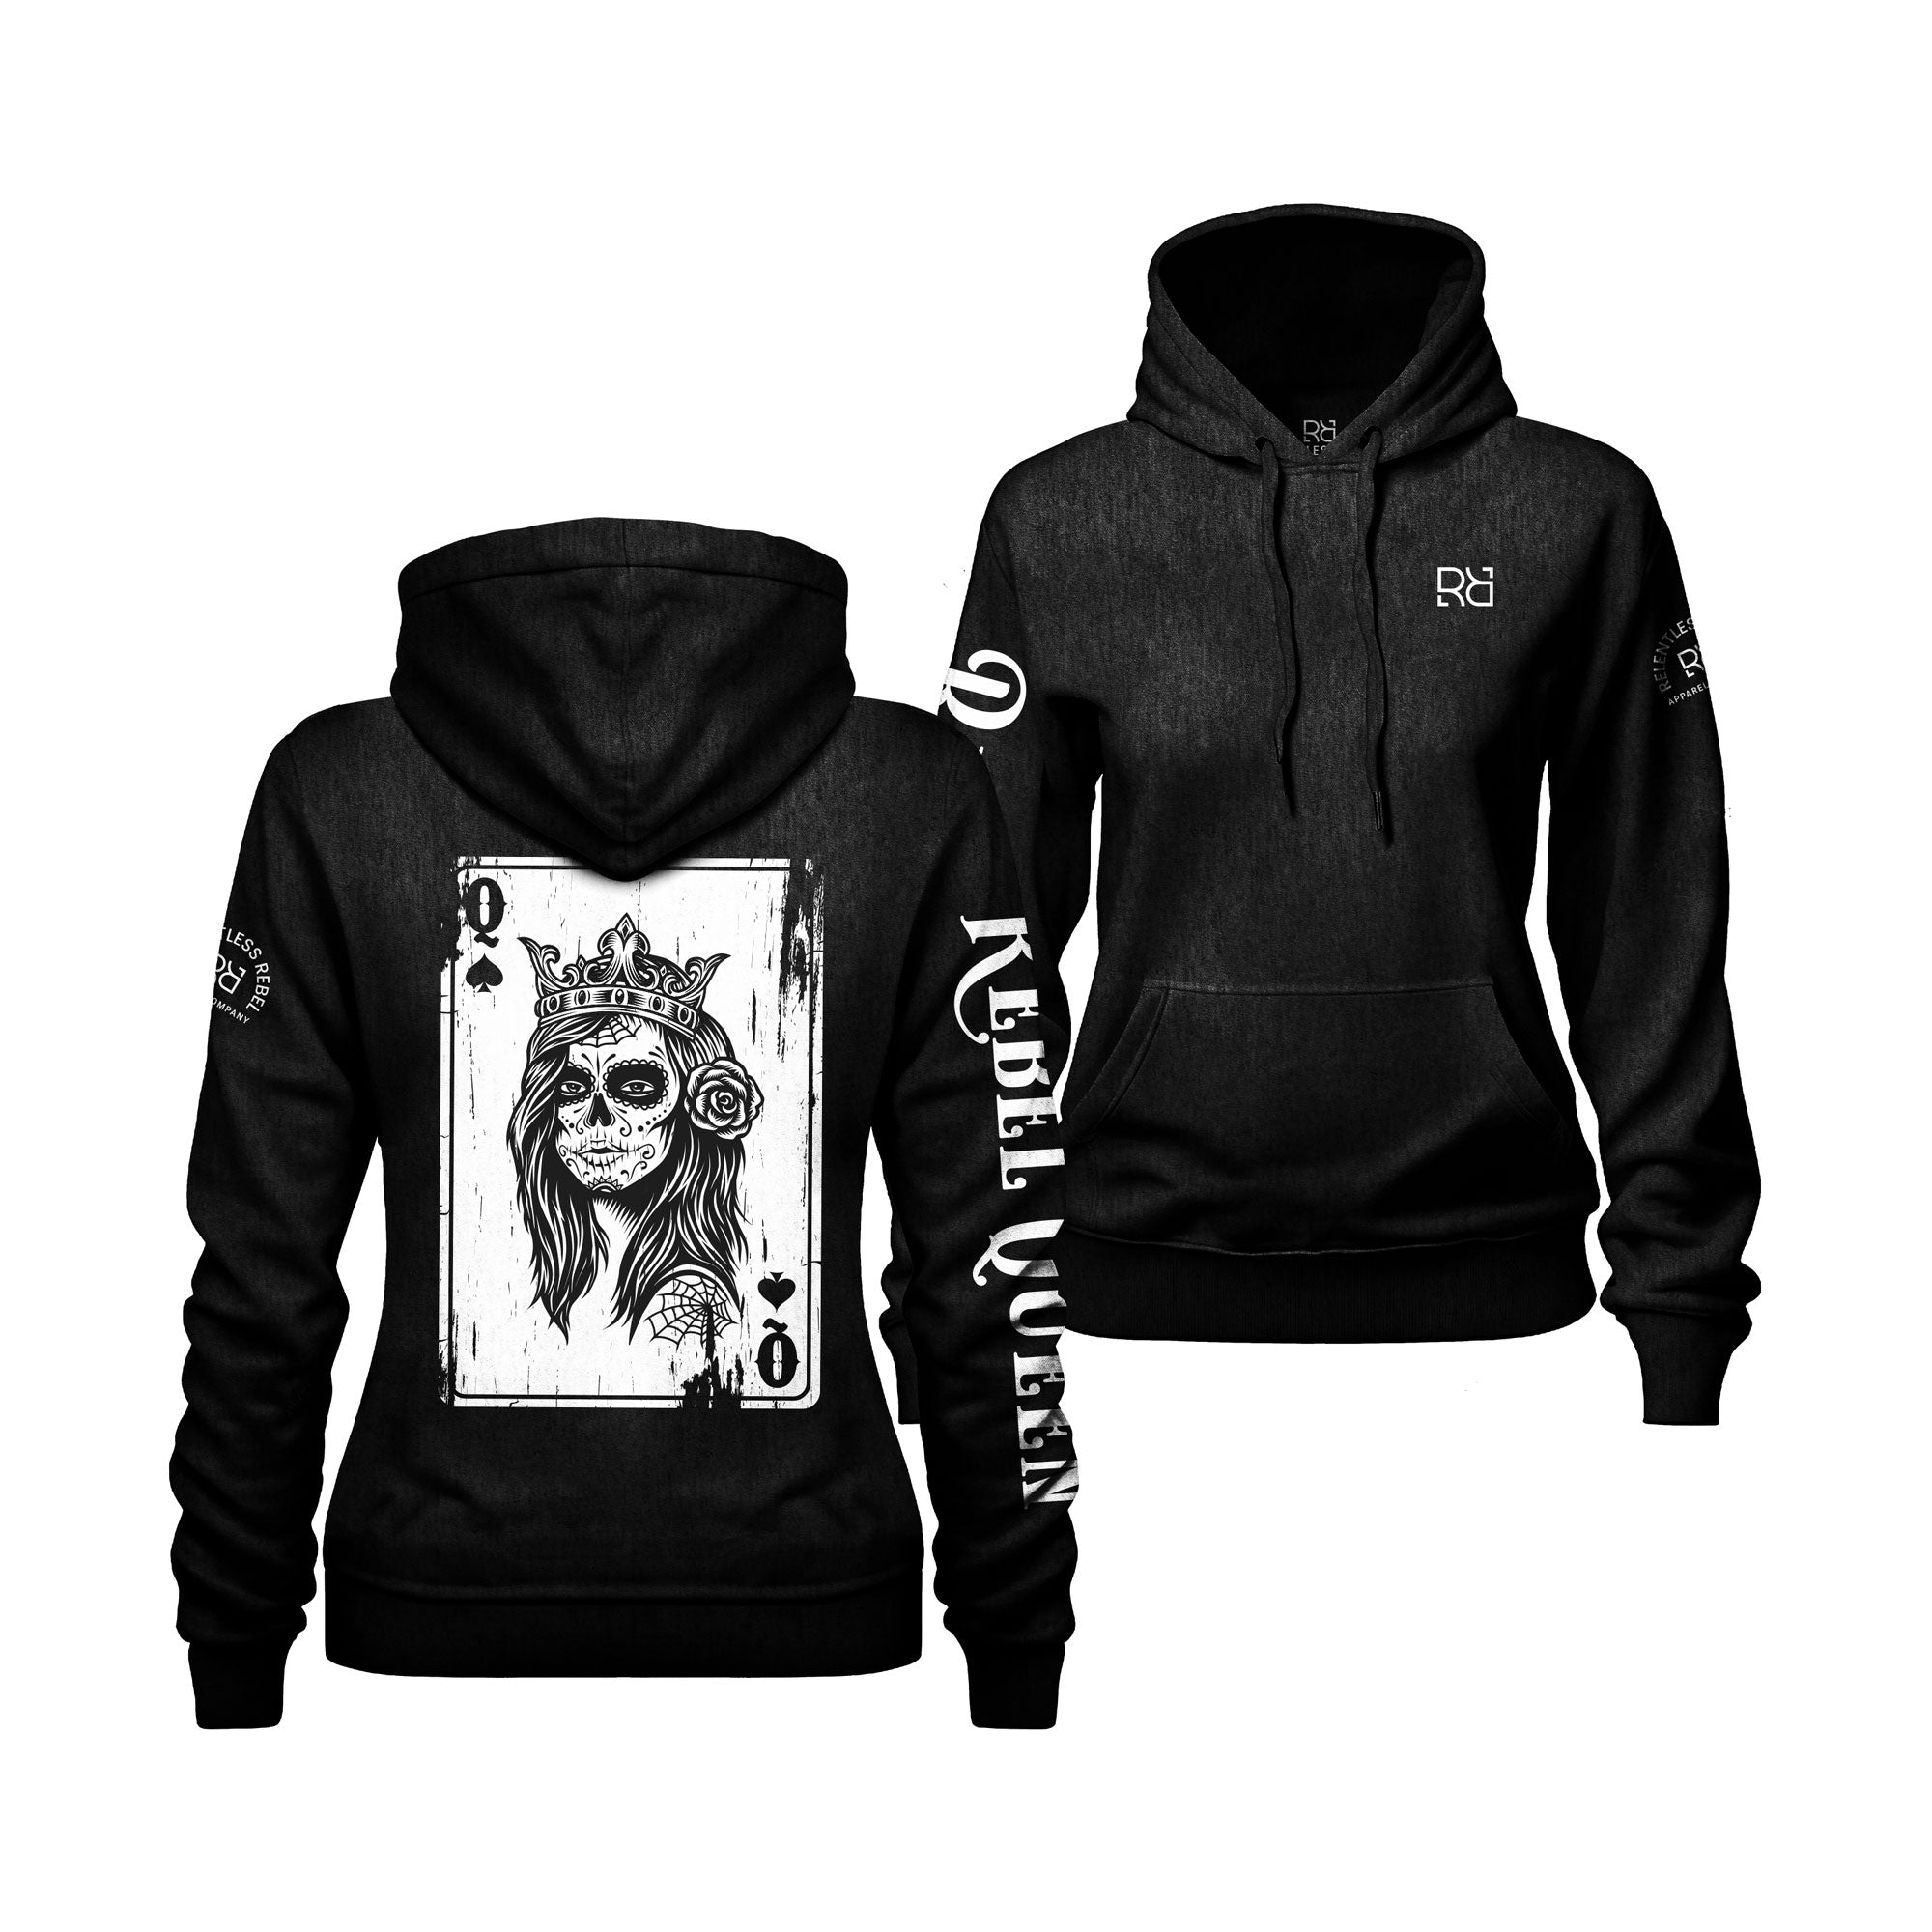 Rebel Queen Ace back design hoodie in black